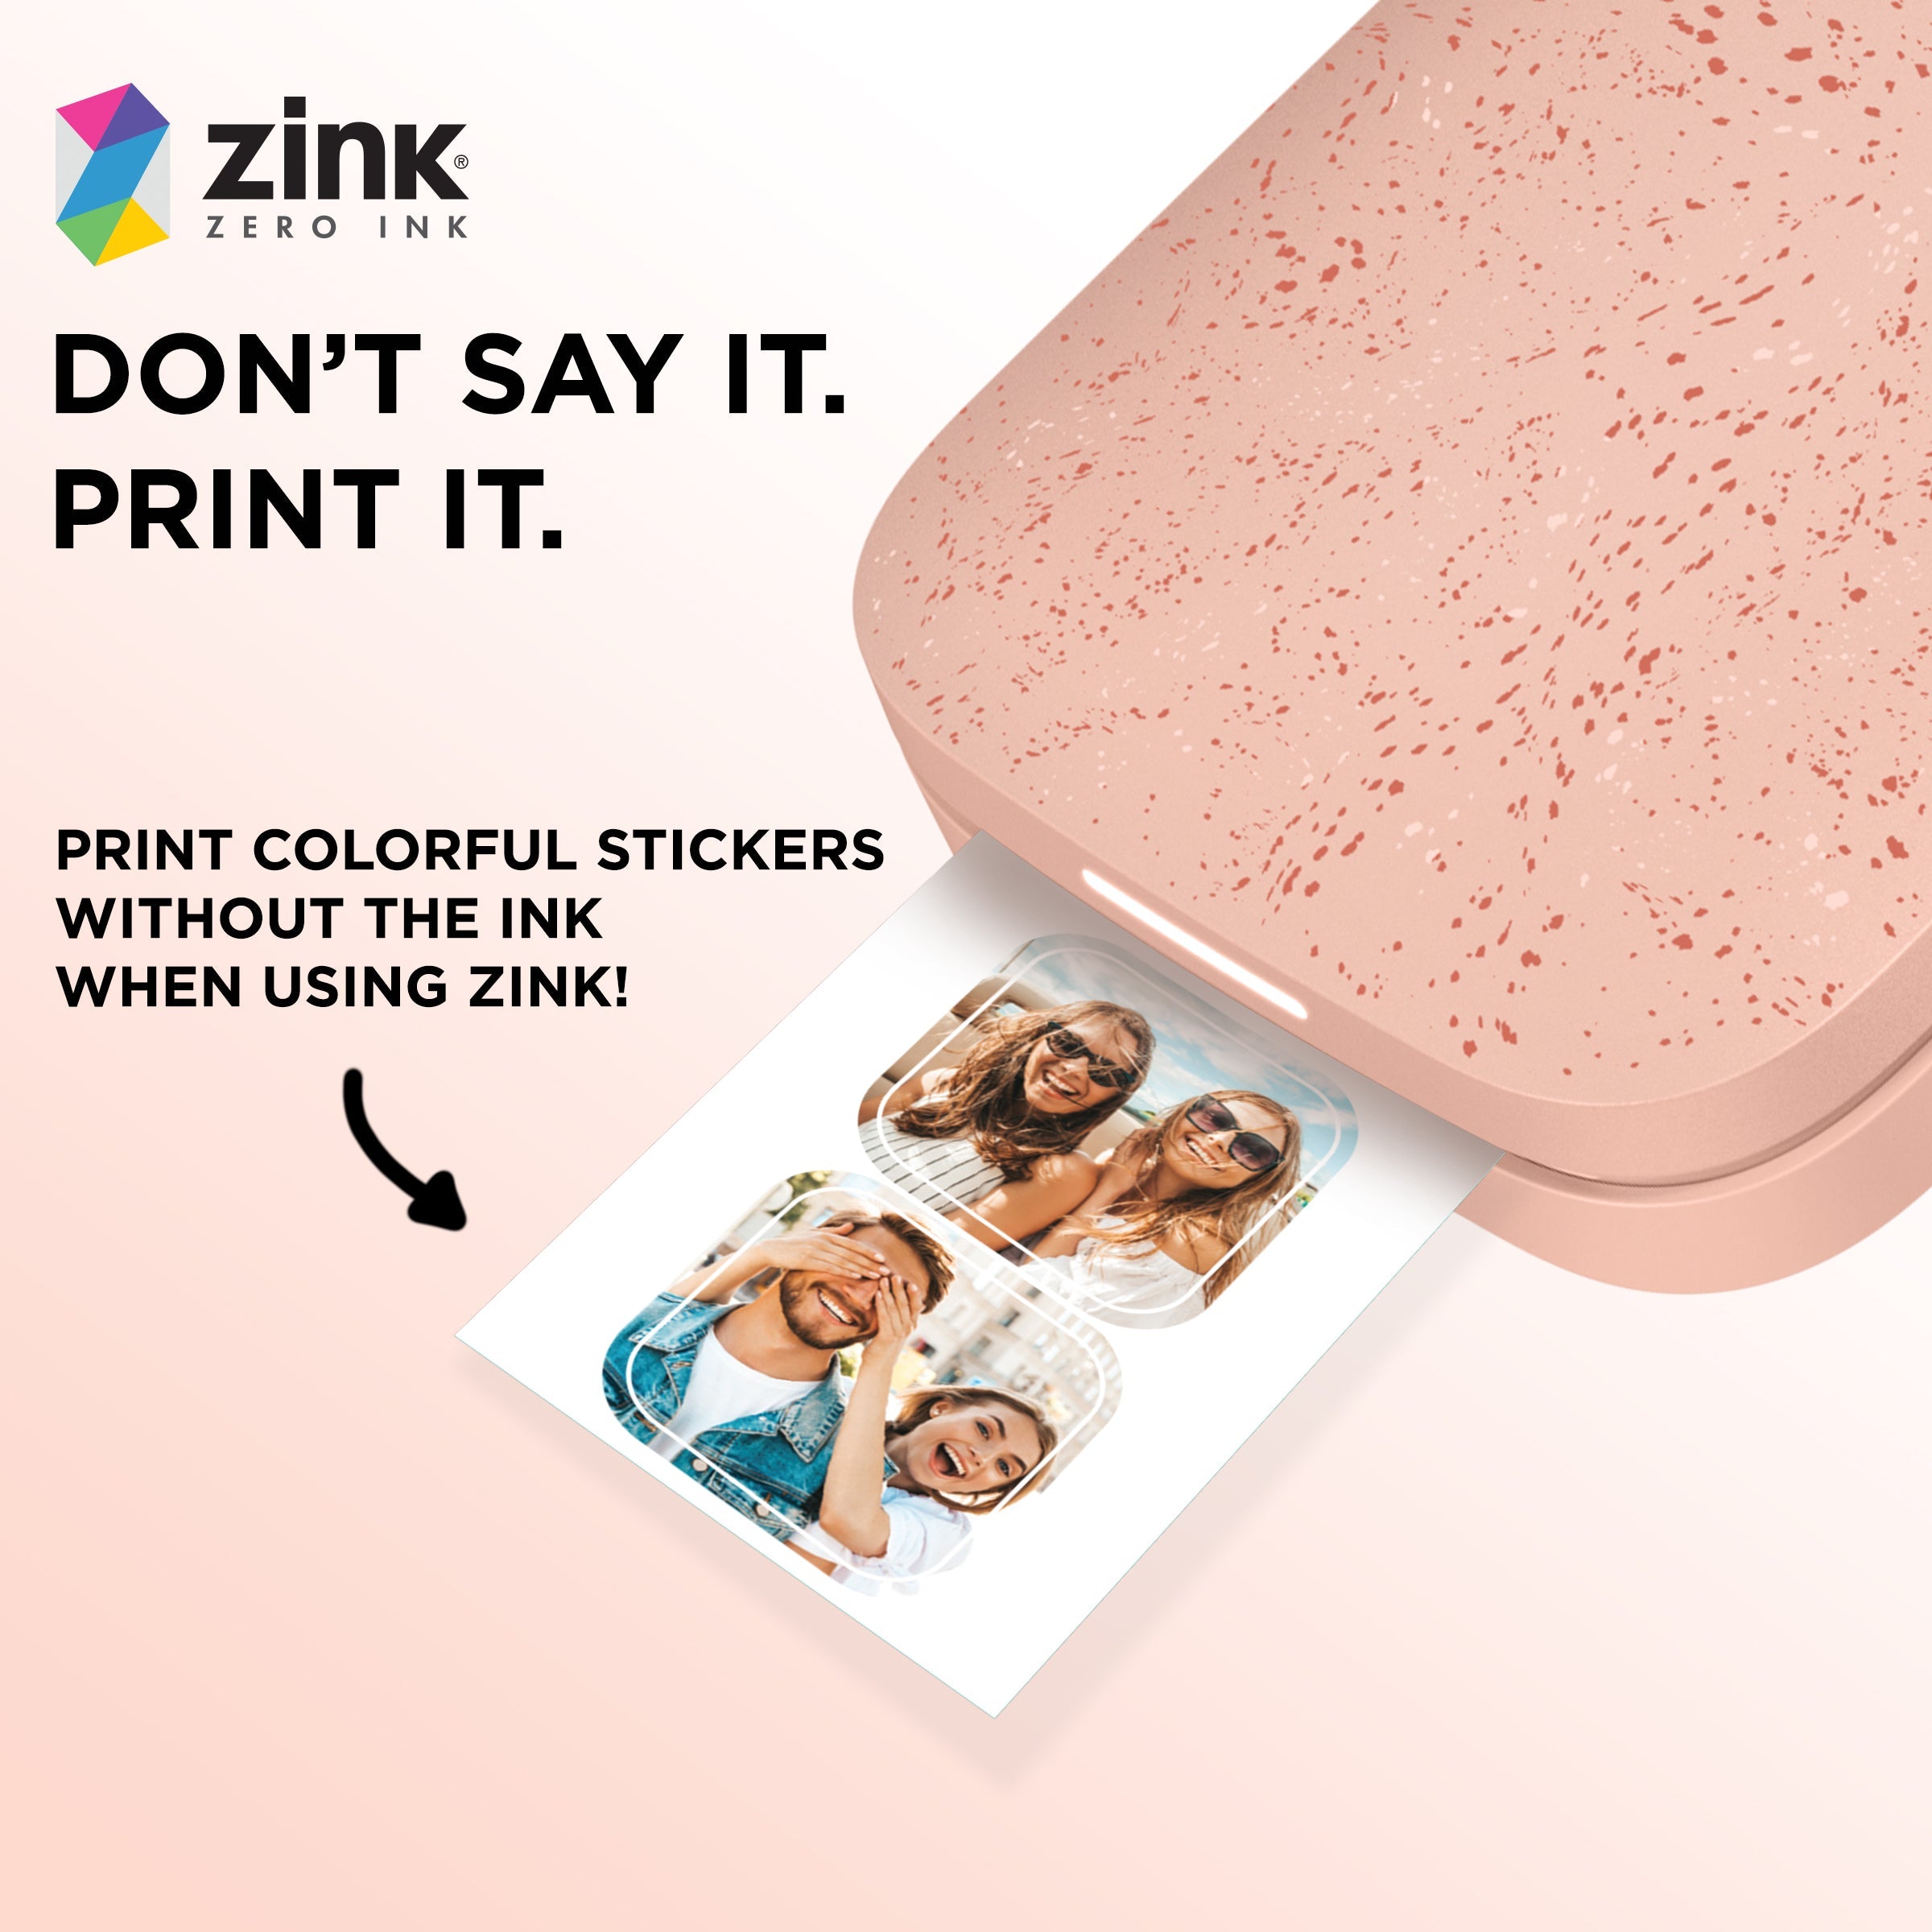 HP Sprocket 2x3” Premium Zink Pre-Cut Sticker Photo Paper (30 Sheets)